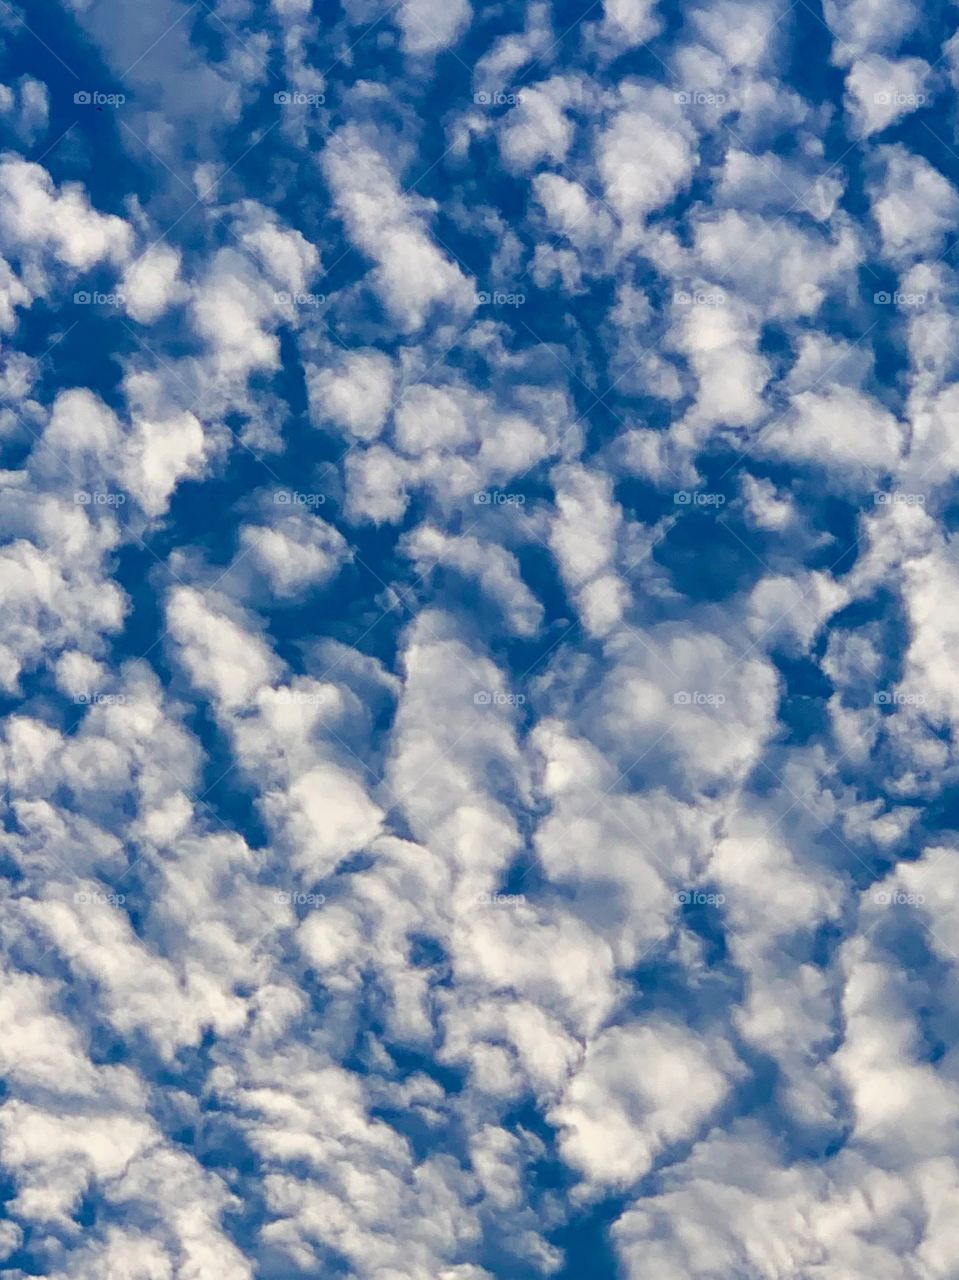 clouds over a blue sky